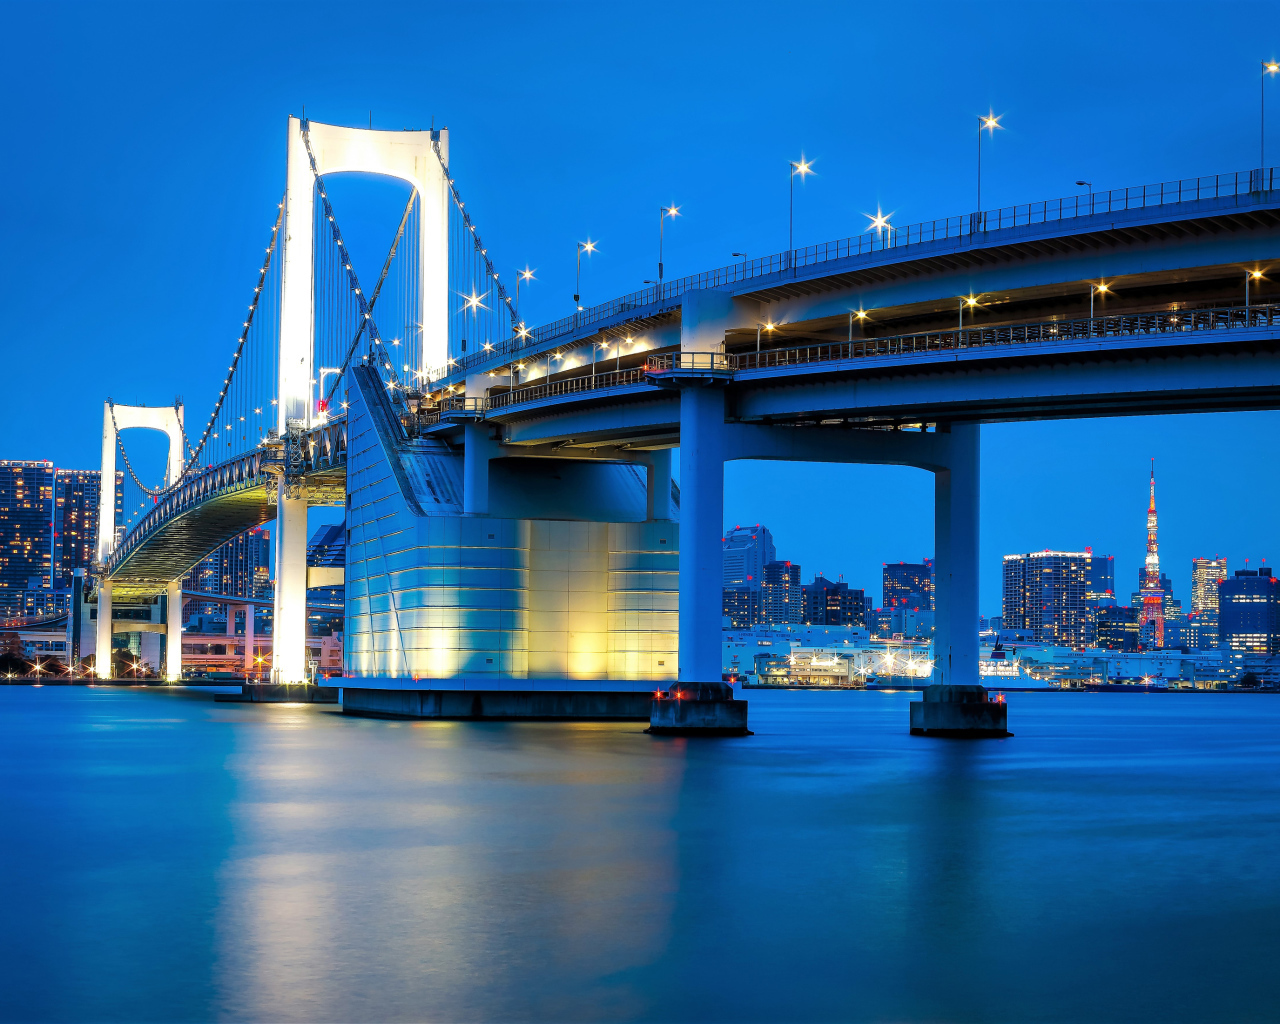 Big beautiful bridge in the evening, Tokyo. Japan